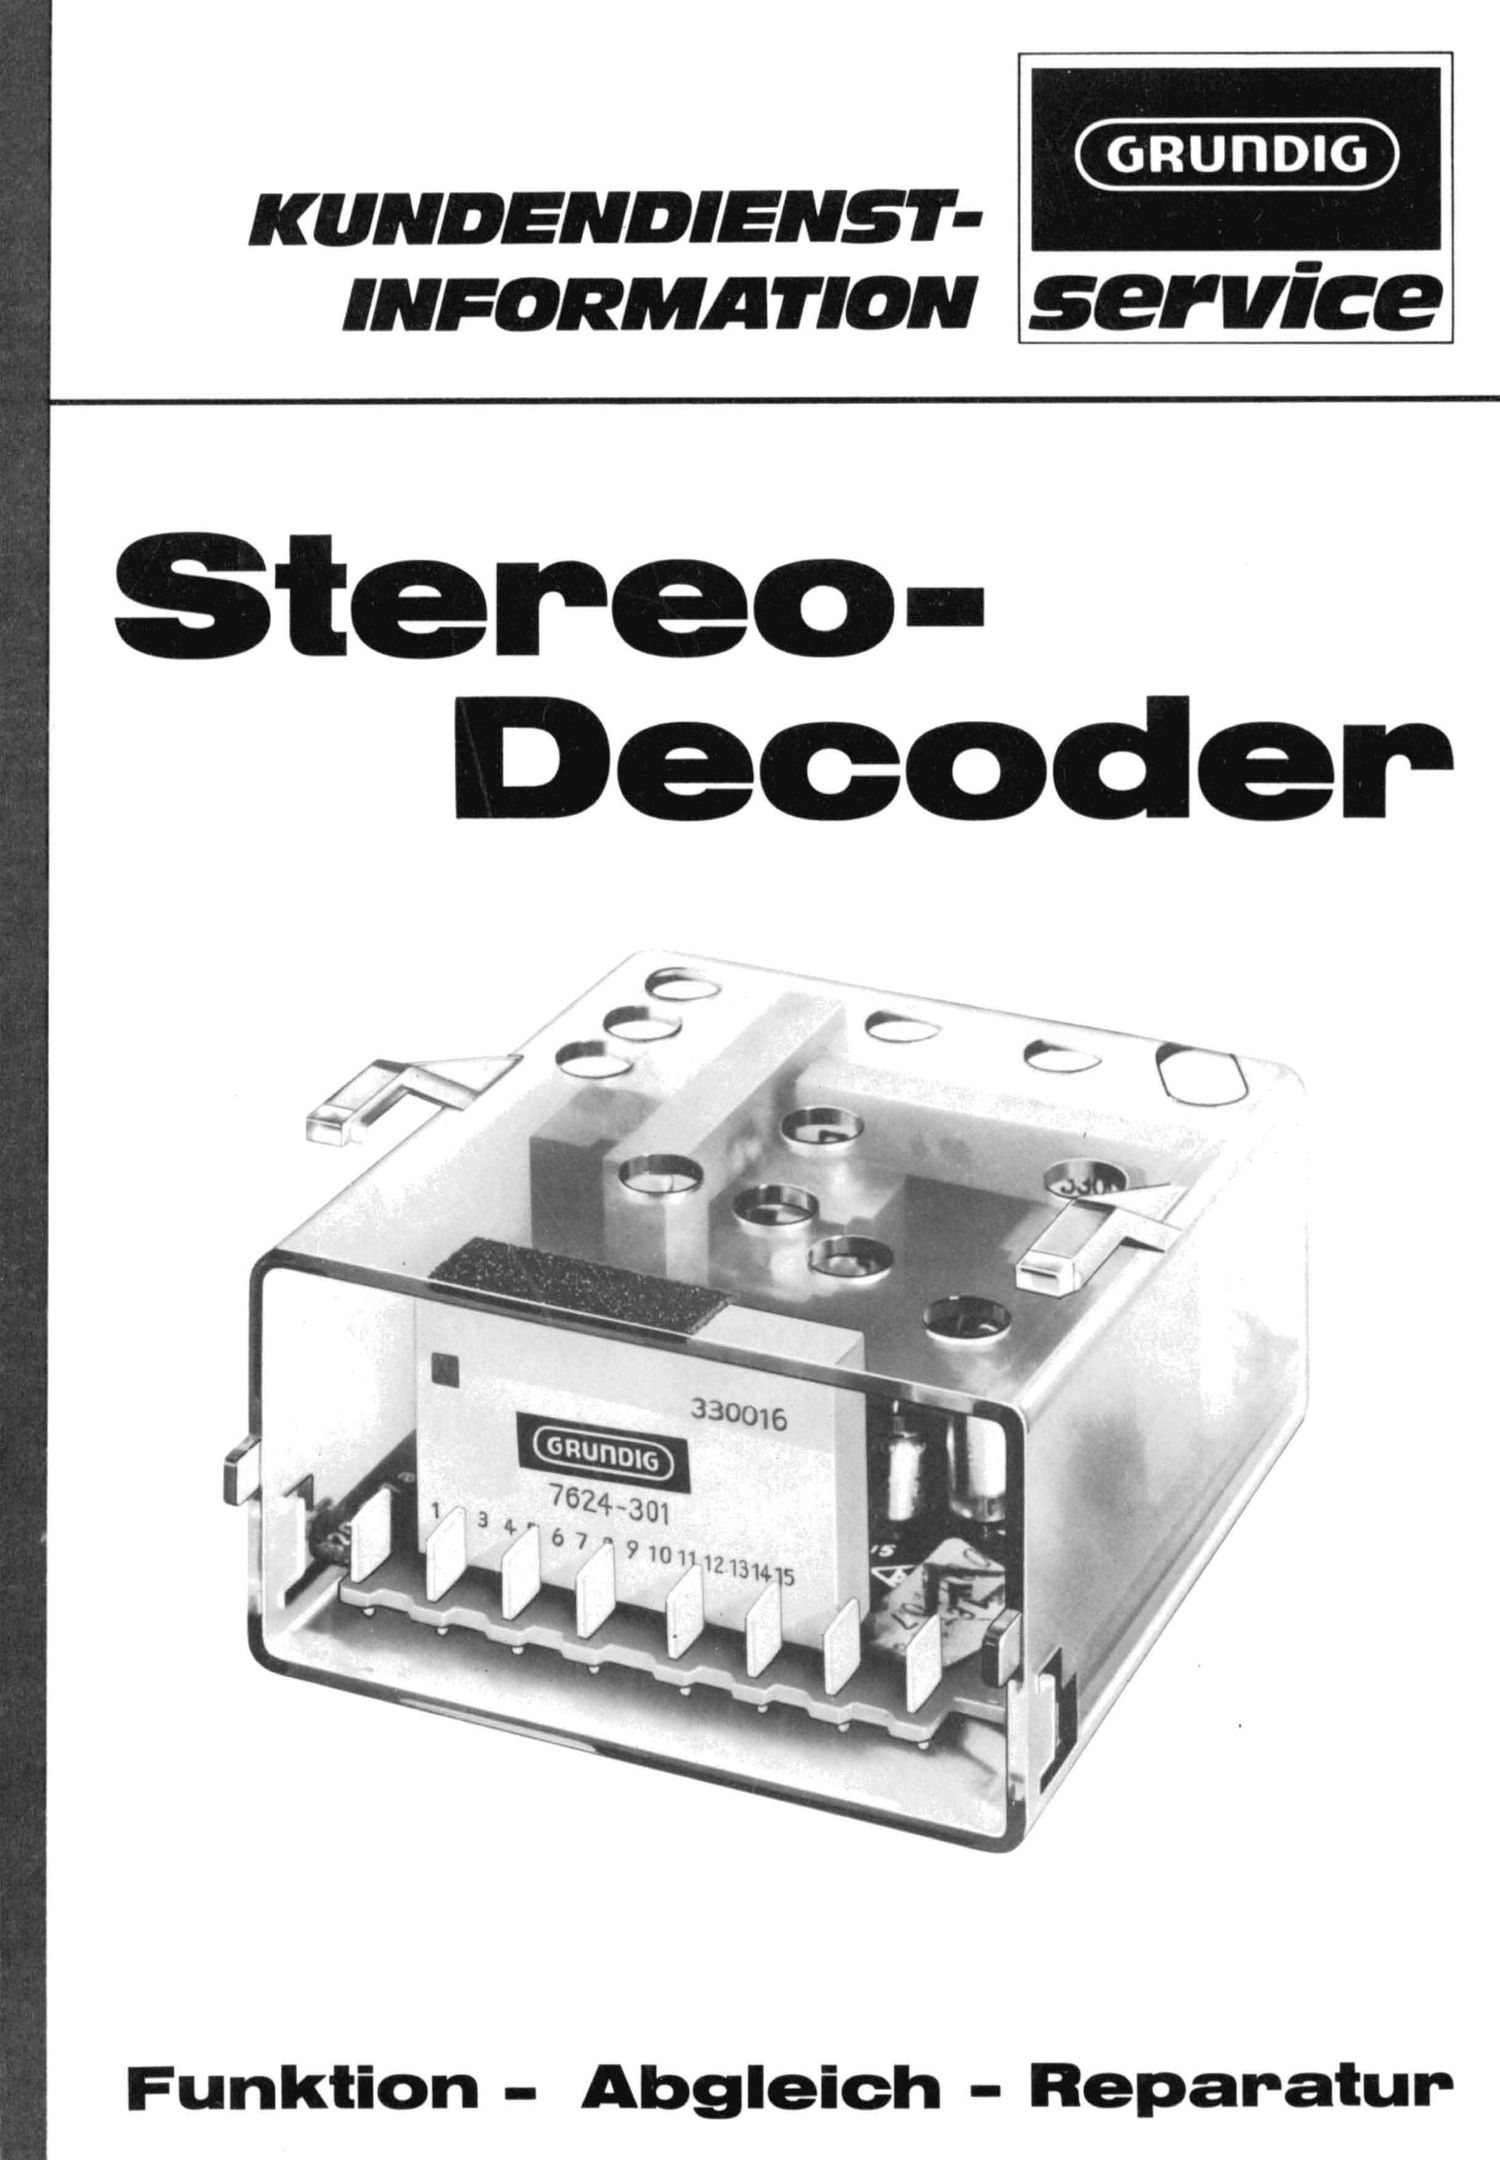 Grundig Stereo Decoder Service Info